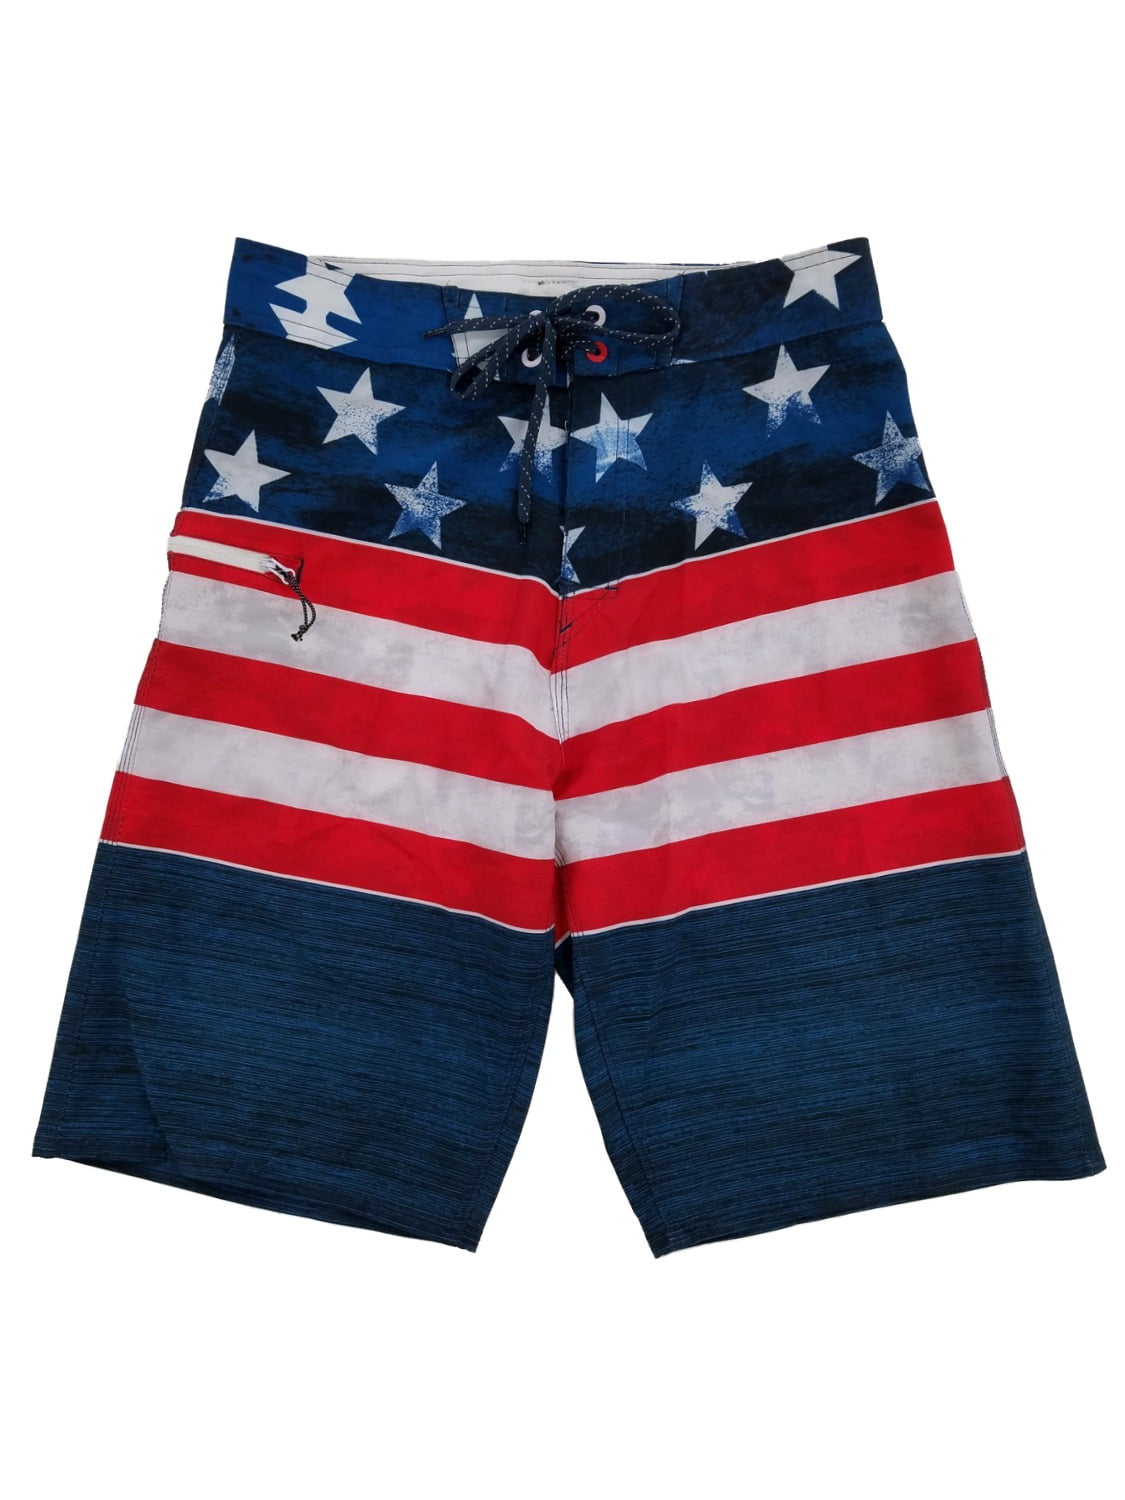 STDKNSK9 Mens Half USA Half Chicago Flag Boardshorts Beach Shorts